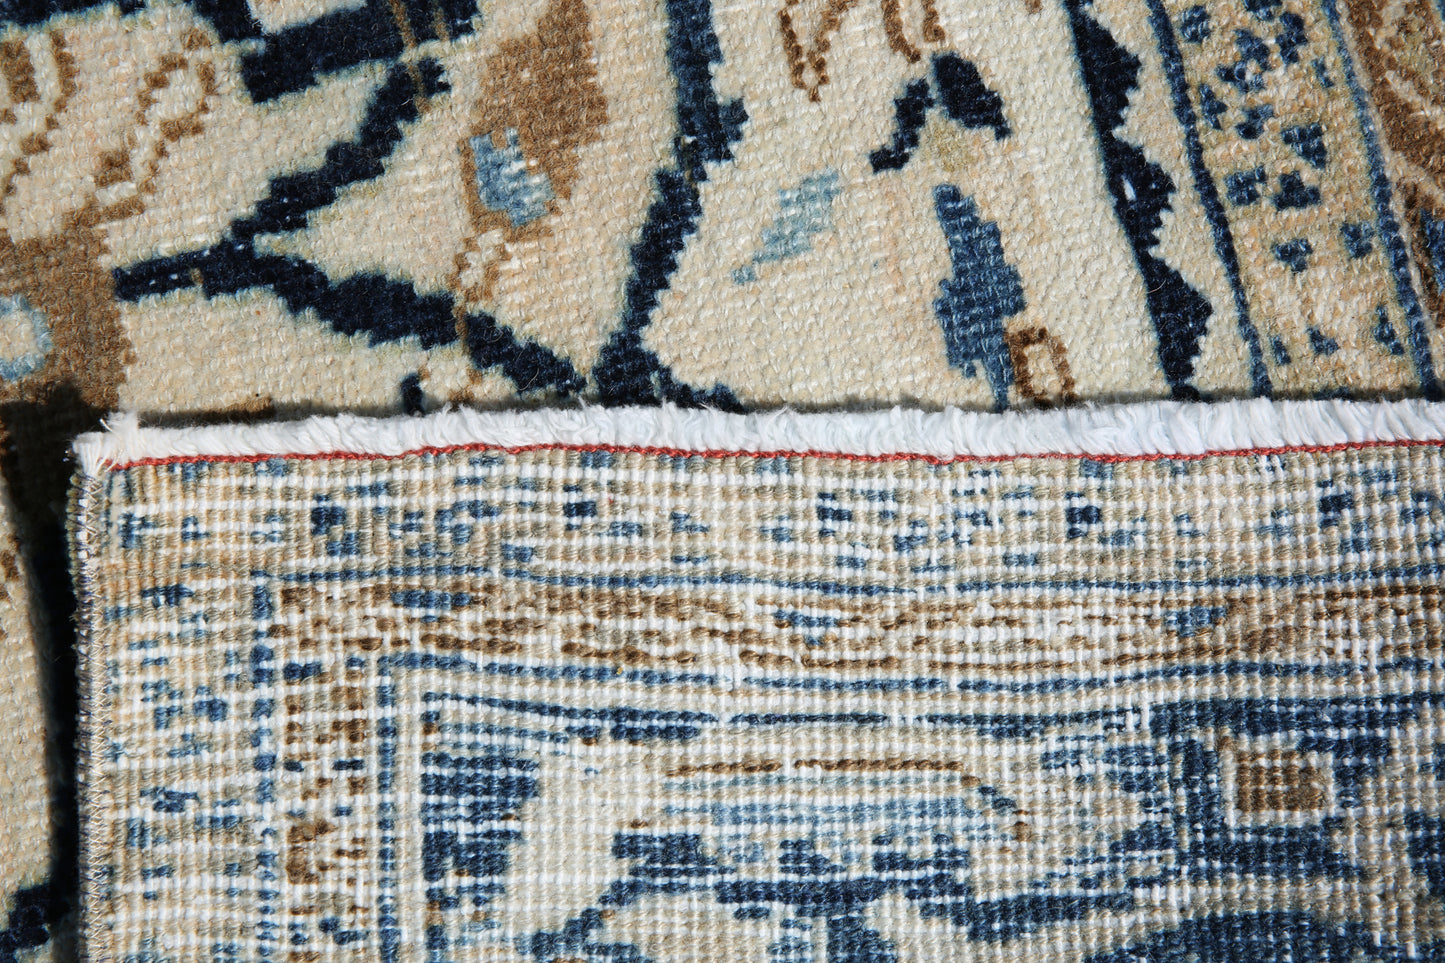 9'7" x 12'10" Vintage Persian Rug - 18737